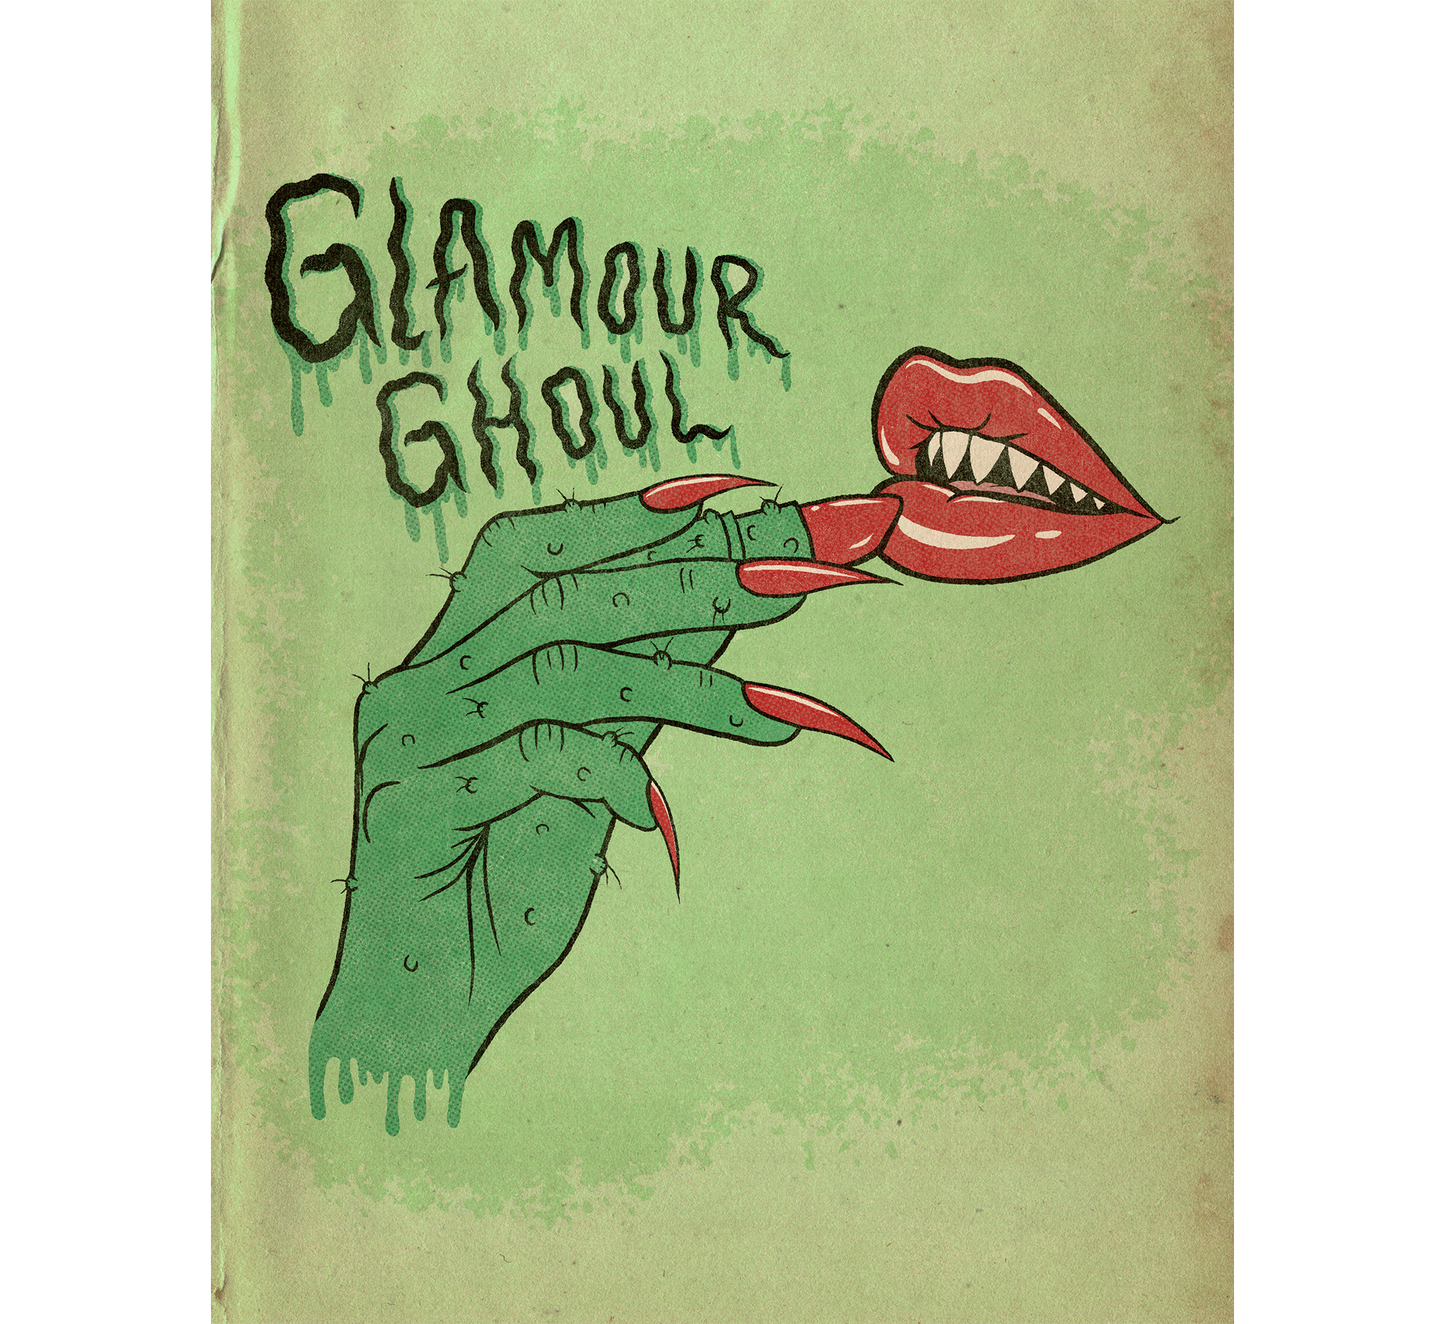     classy-creeps-glamour-ghoul-art-print